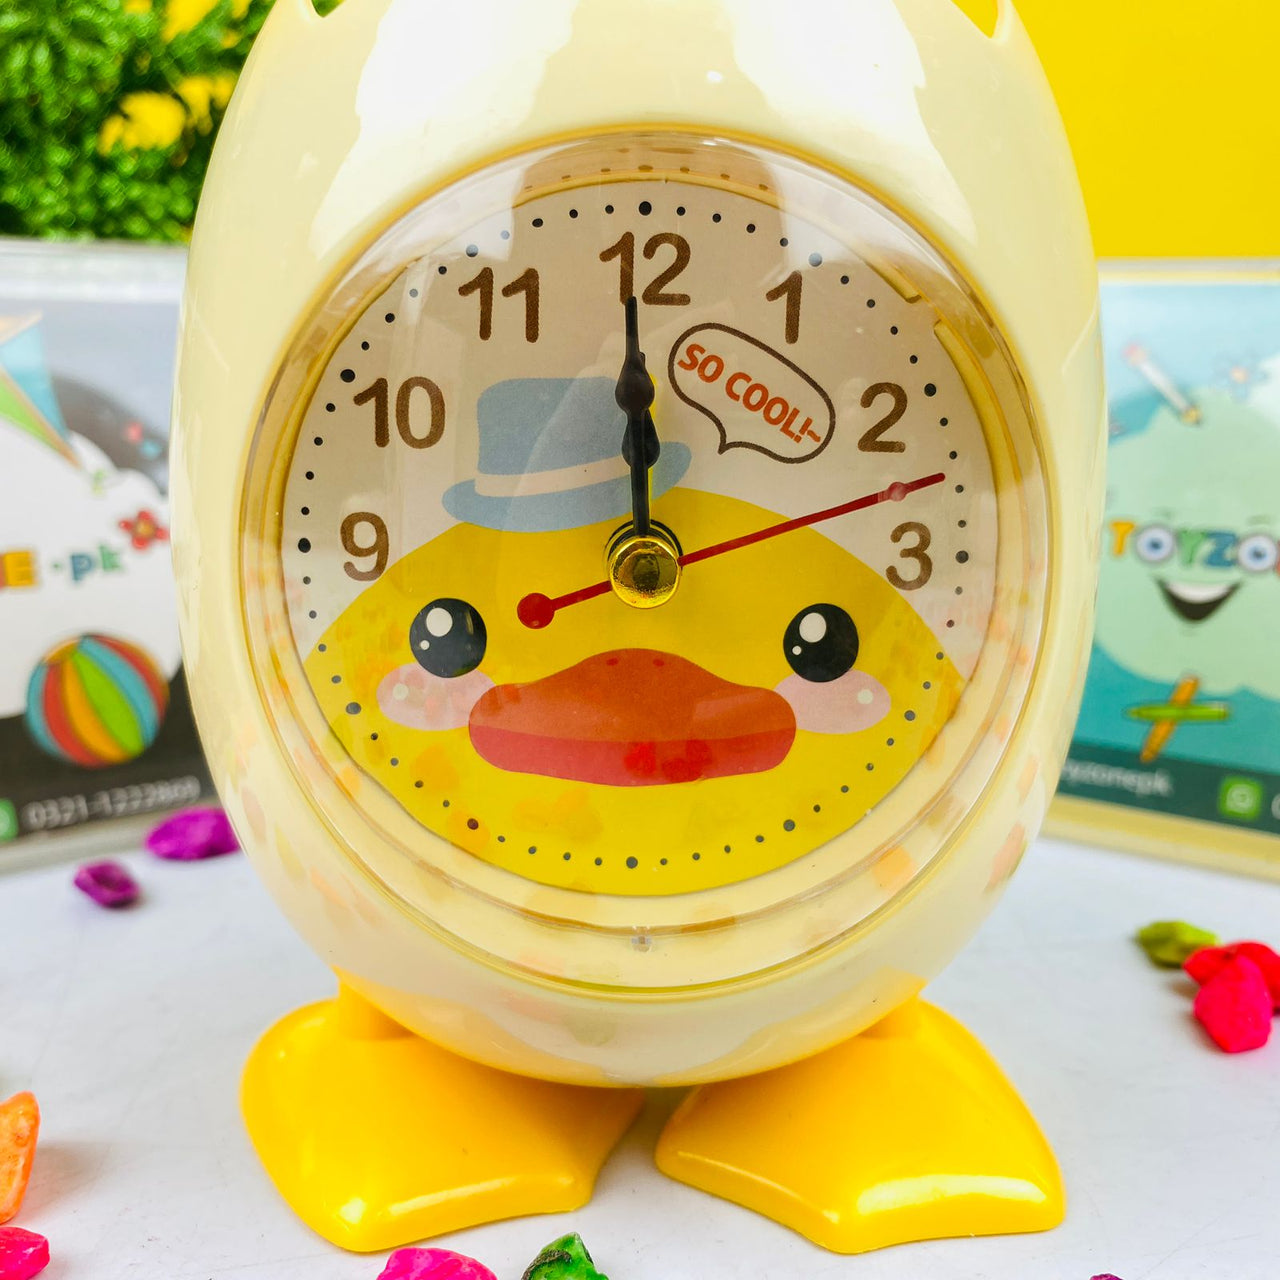 duck shaped table alarm clock